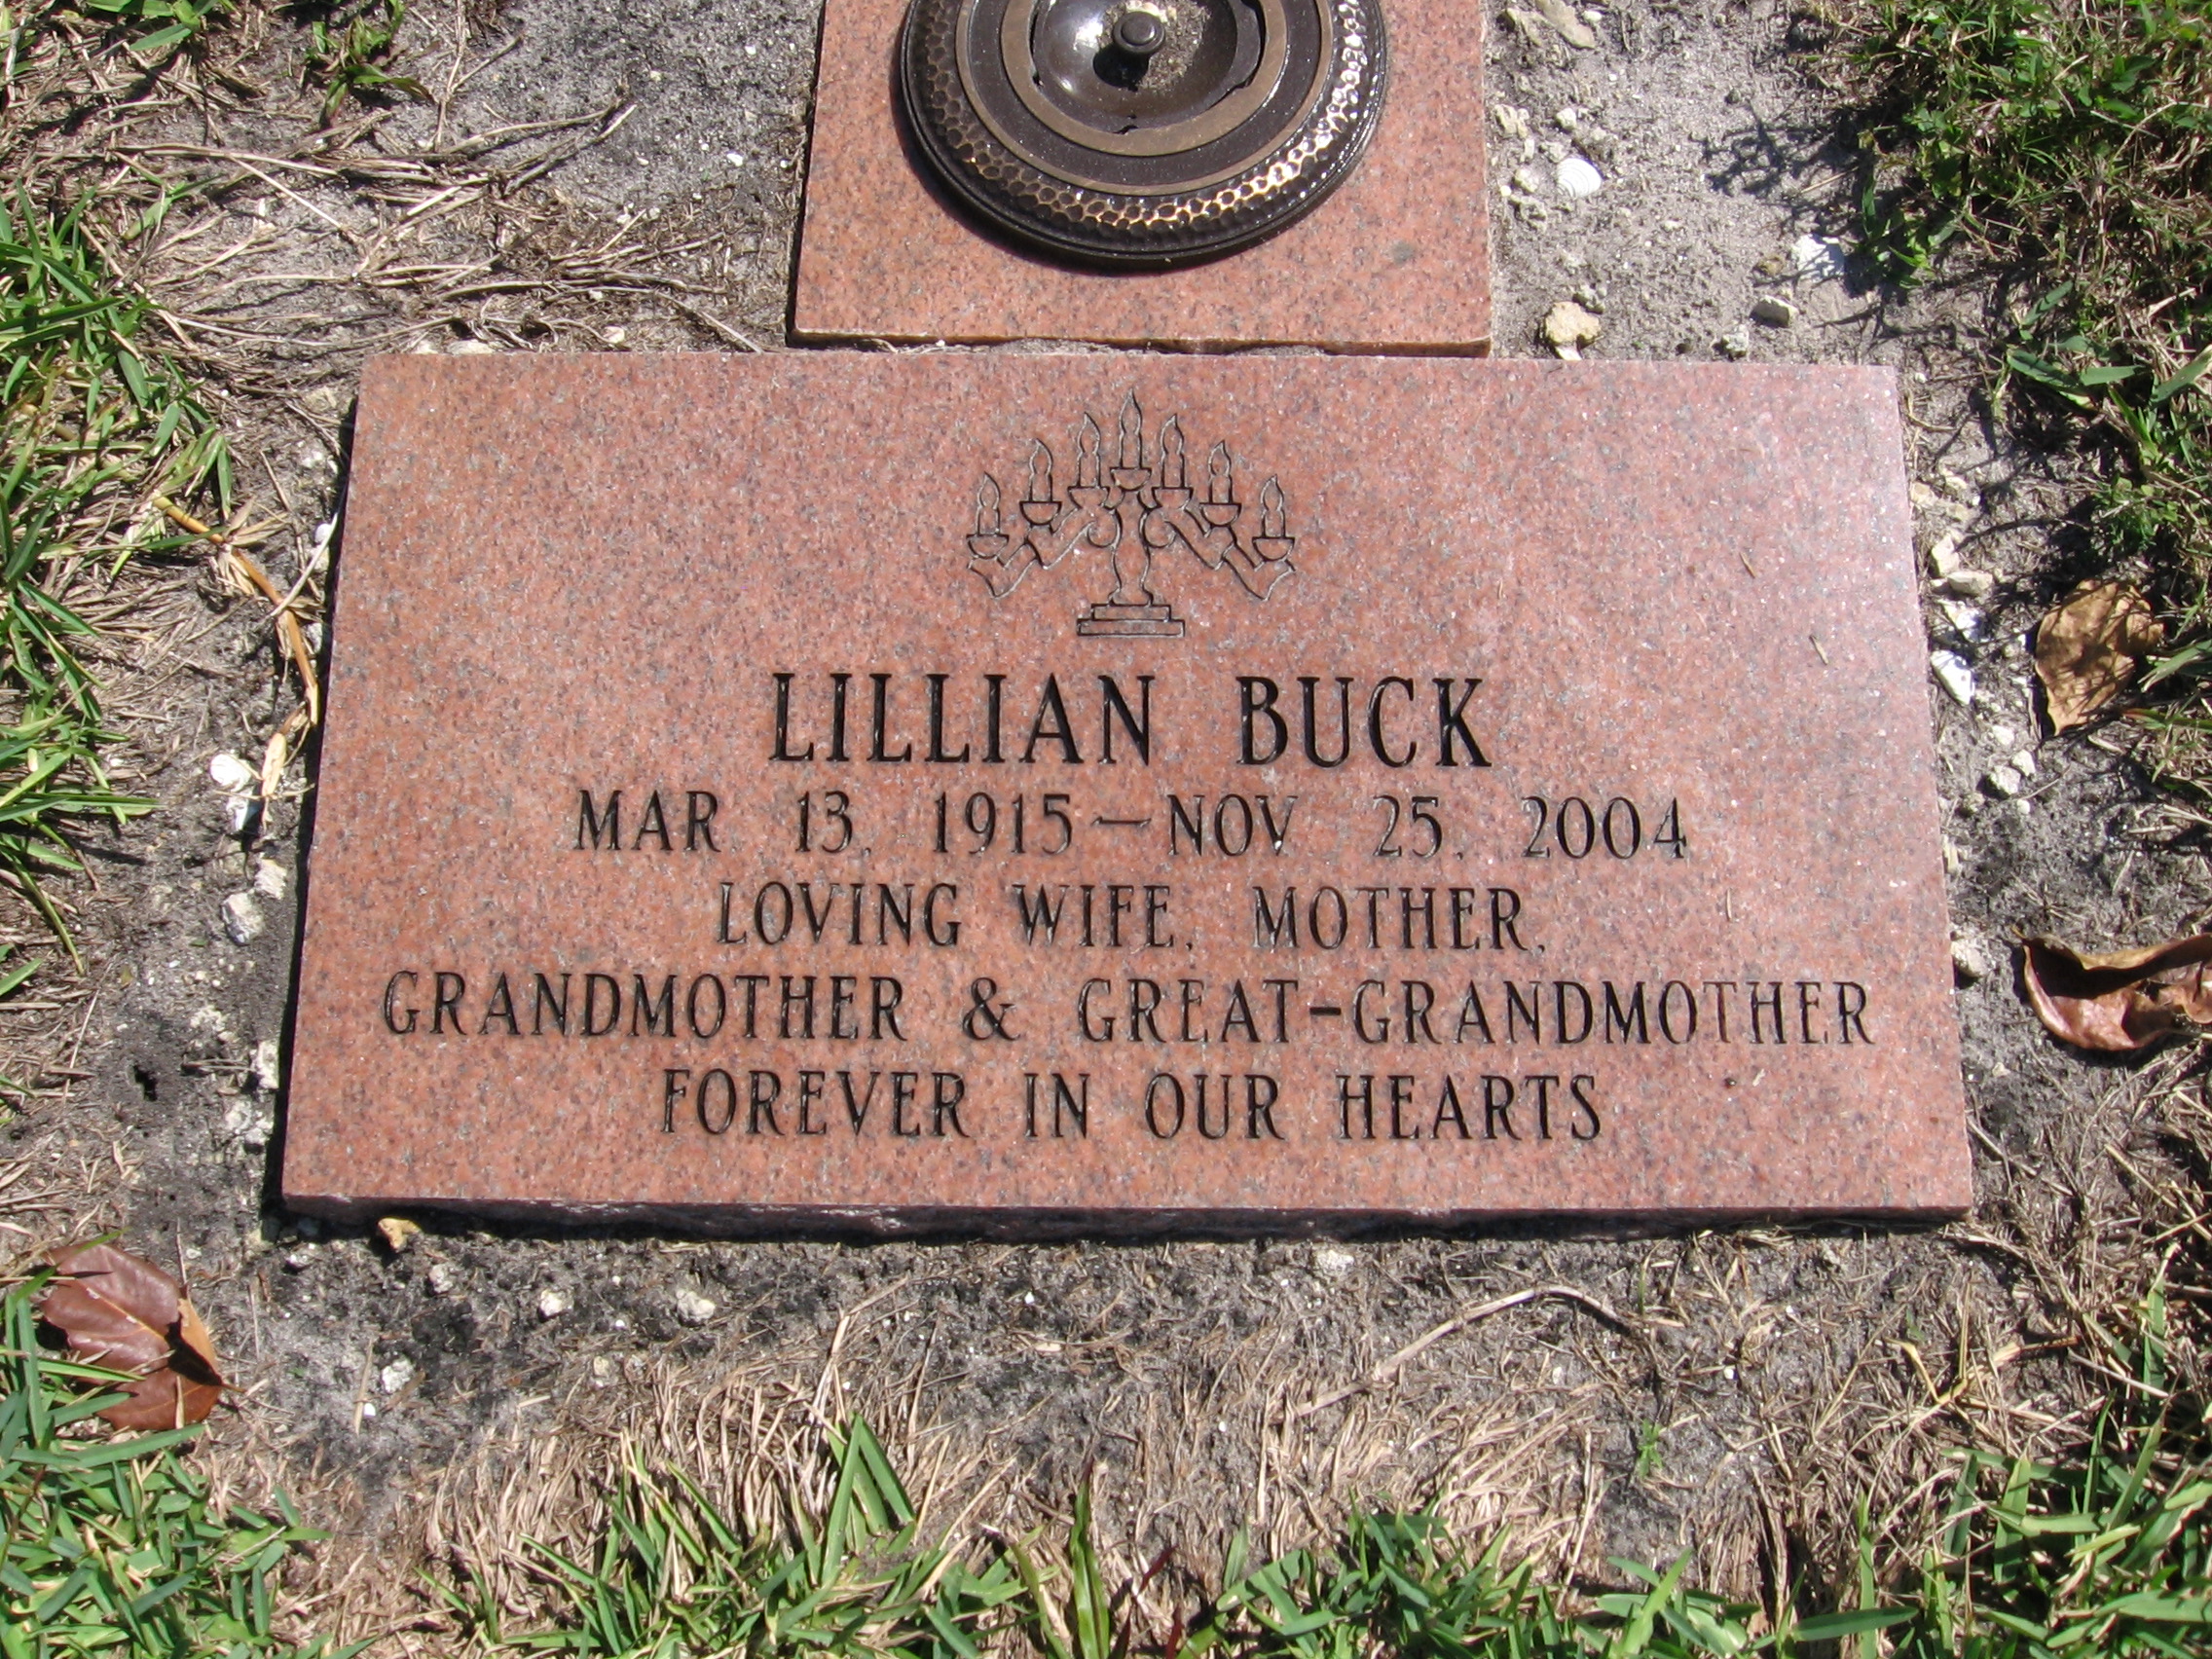 Lillian Buck